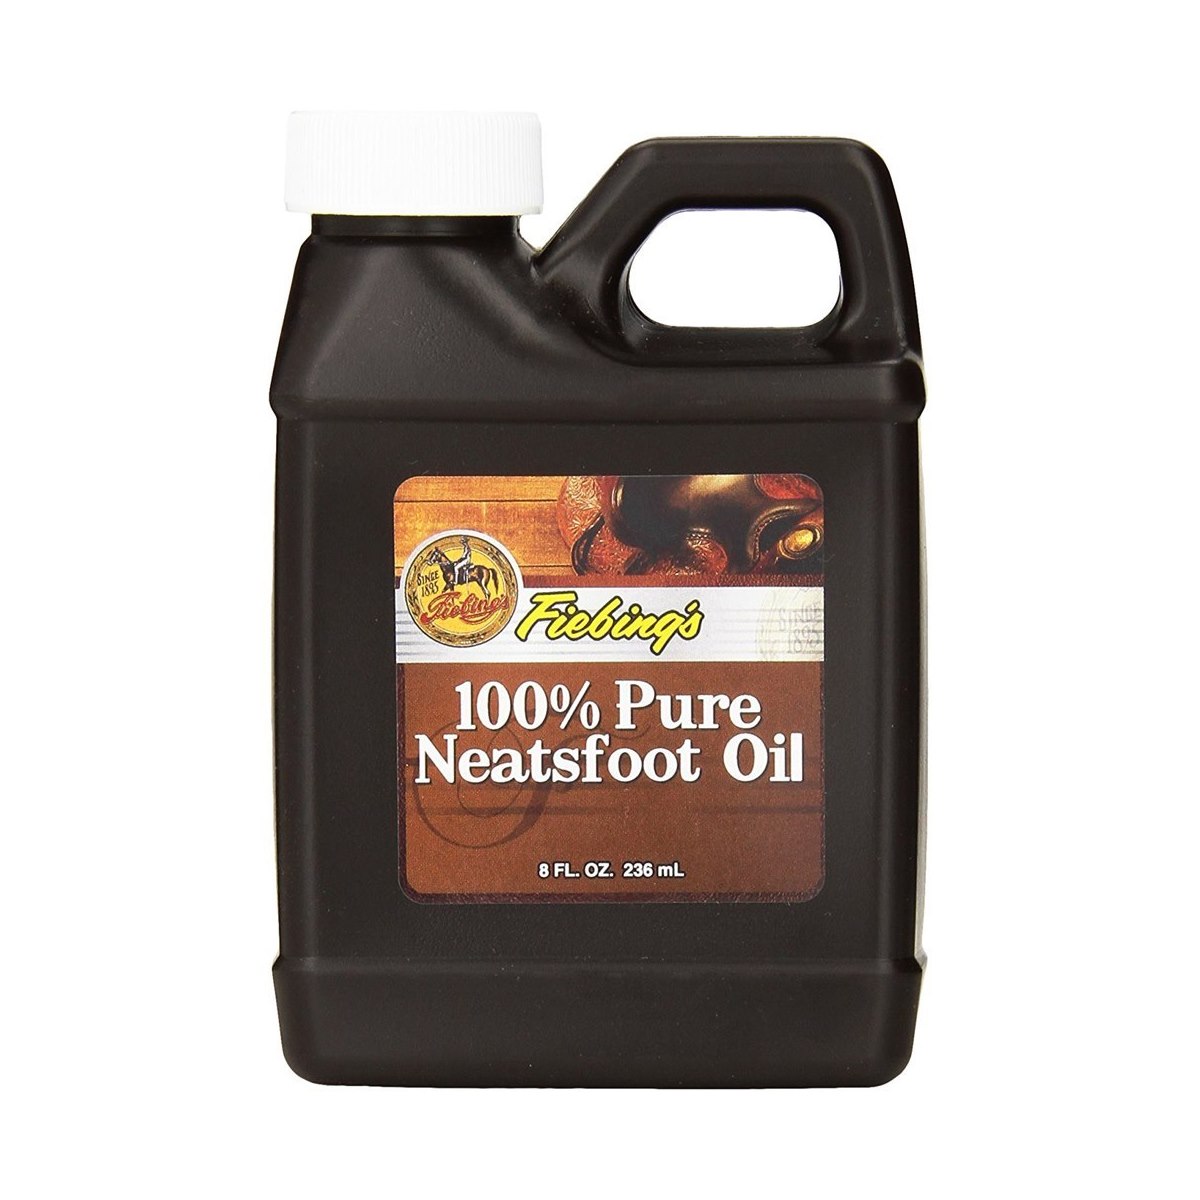 Fiebings 100% Pure Neatsfoot Oil 236ml